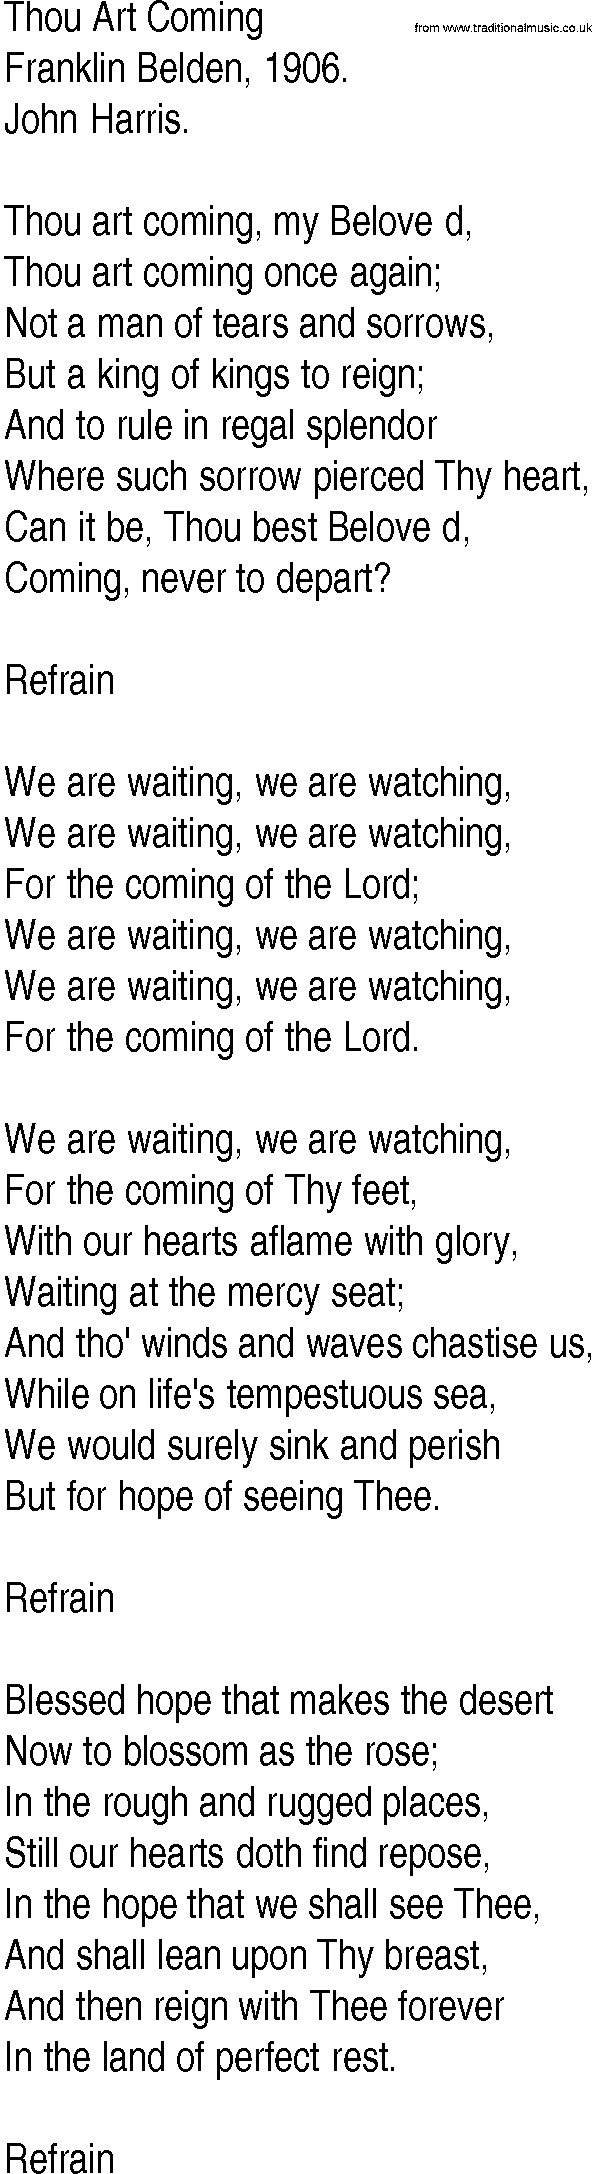 Hymn and Gospel Song: Thou Art Coming by Franklin Belden lyrics